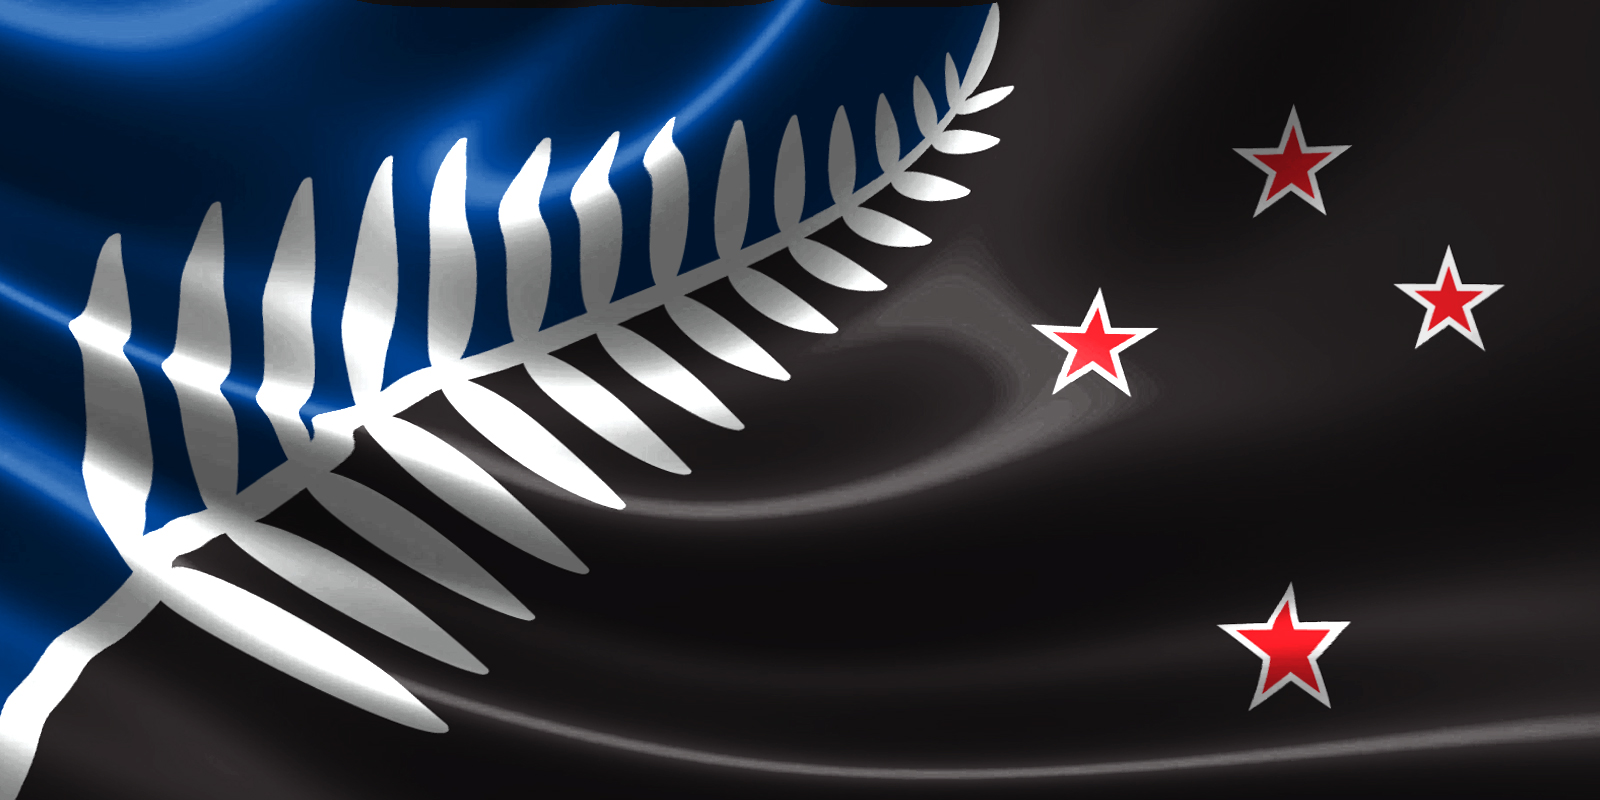 New Zealand All Blacks Wallpaper